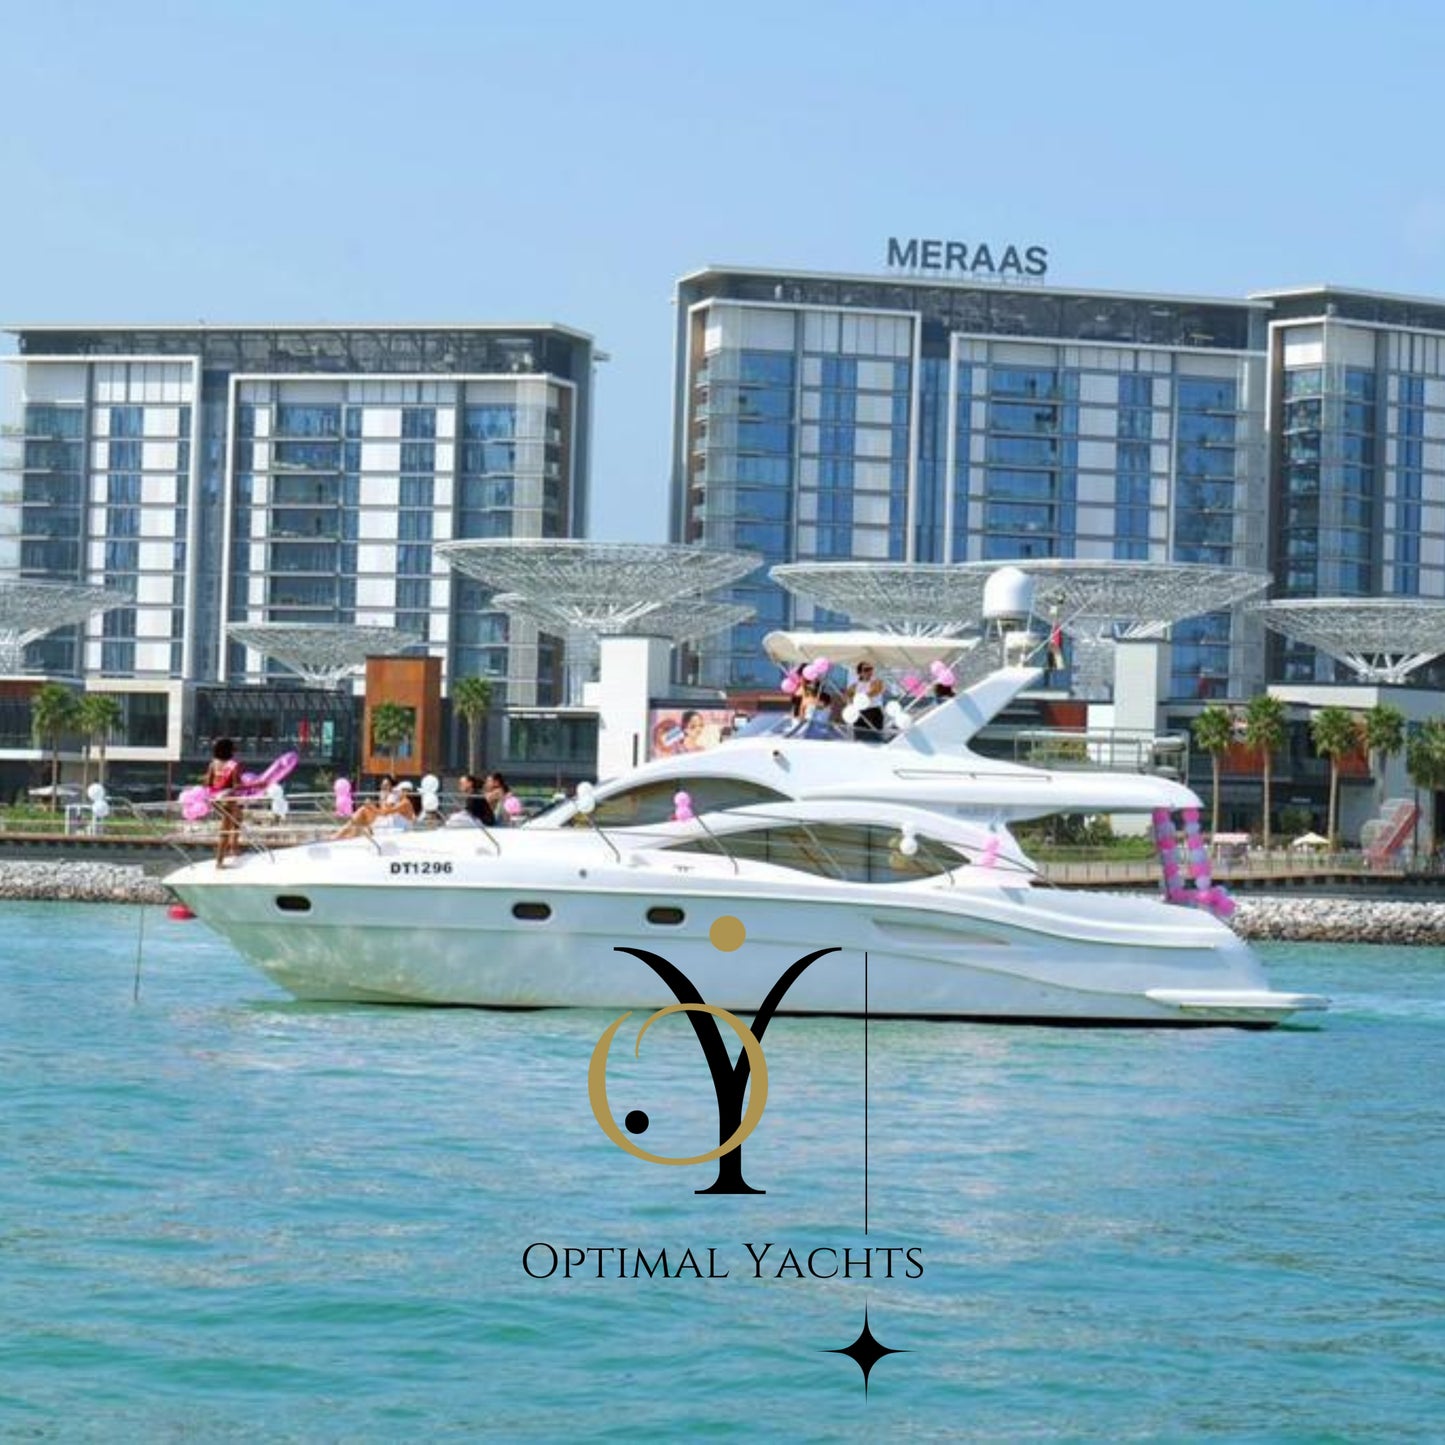 53ft Fly Bridge Yacht, Charter from Dubai Harbour 12pax.